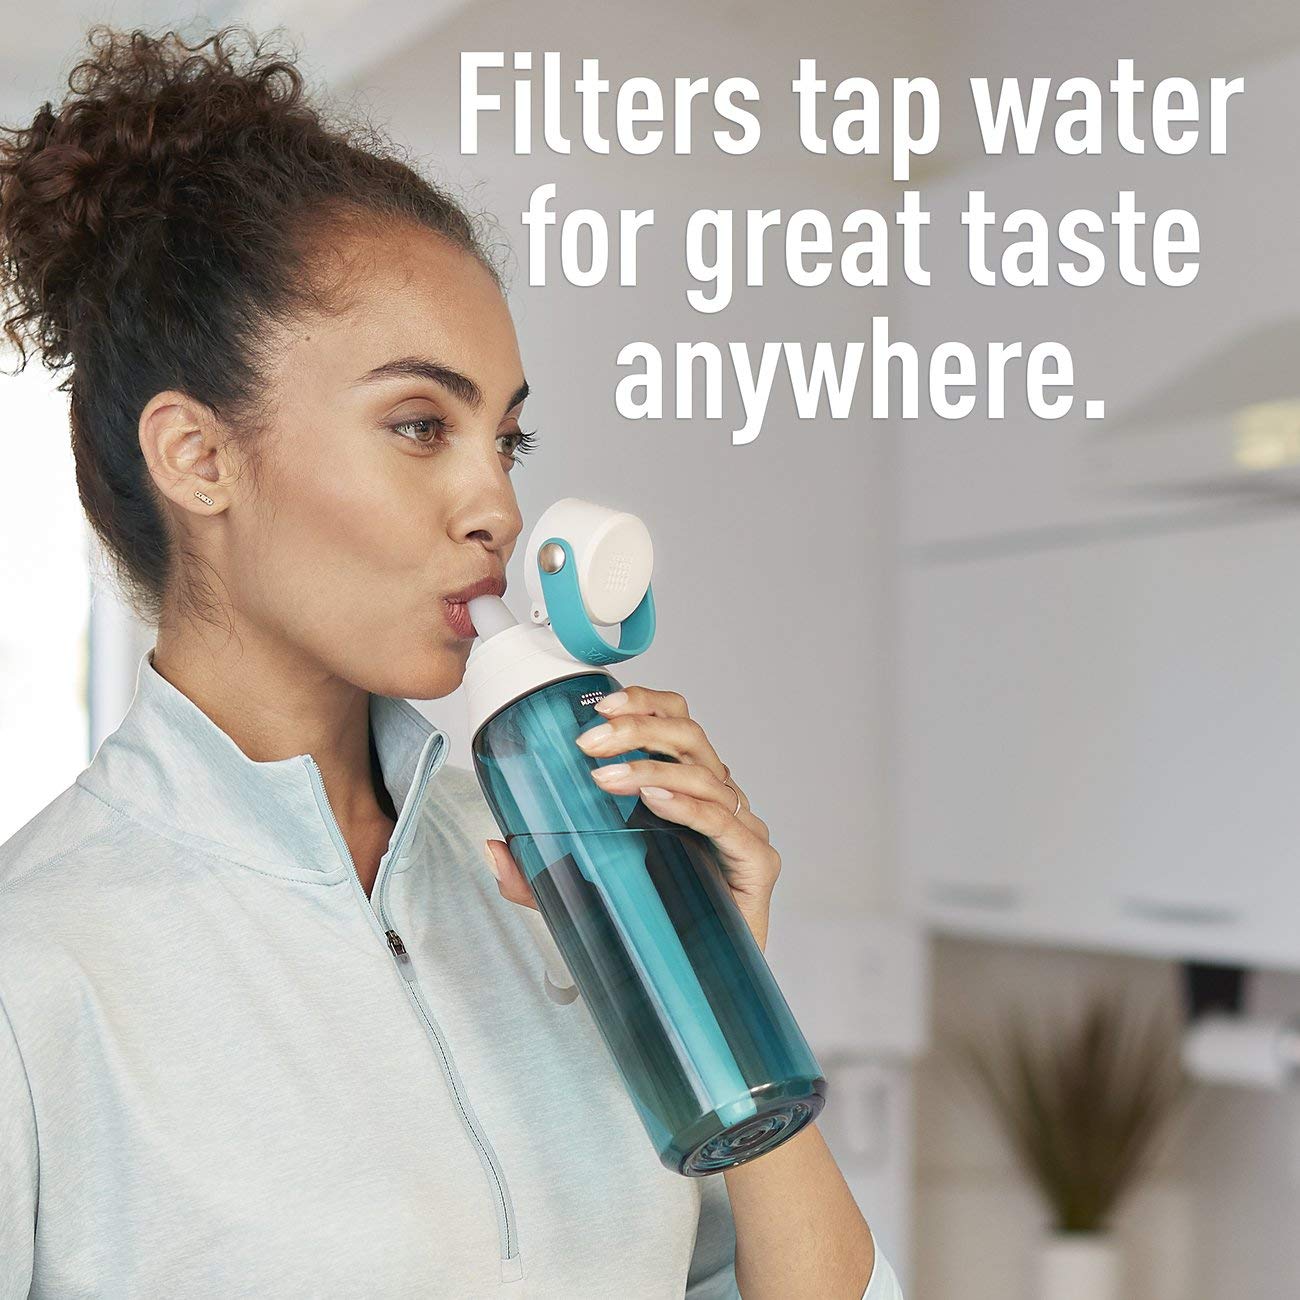 Brita Premium 26 oz. Filtering Water Bottle with BPA Free in Sea